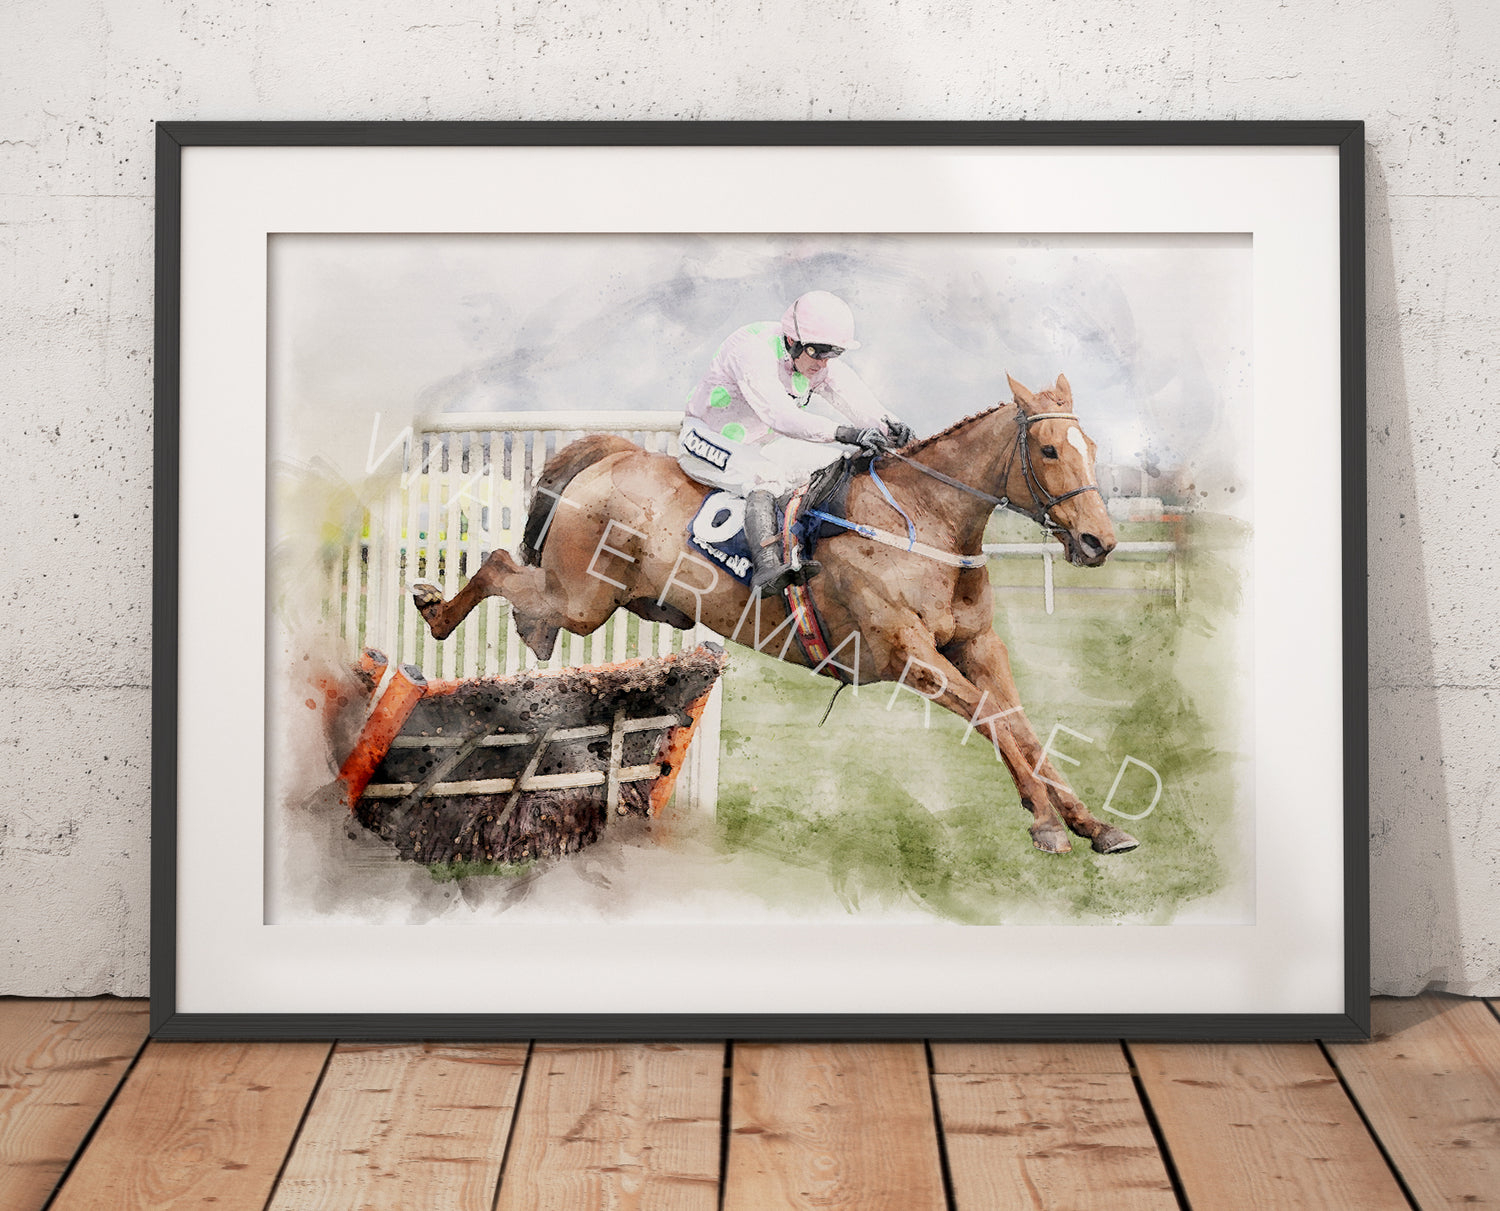 Racehorse Prints in a digital watercolour art style